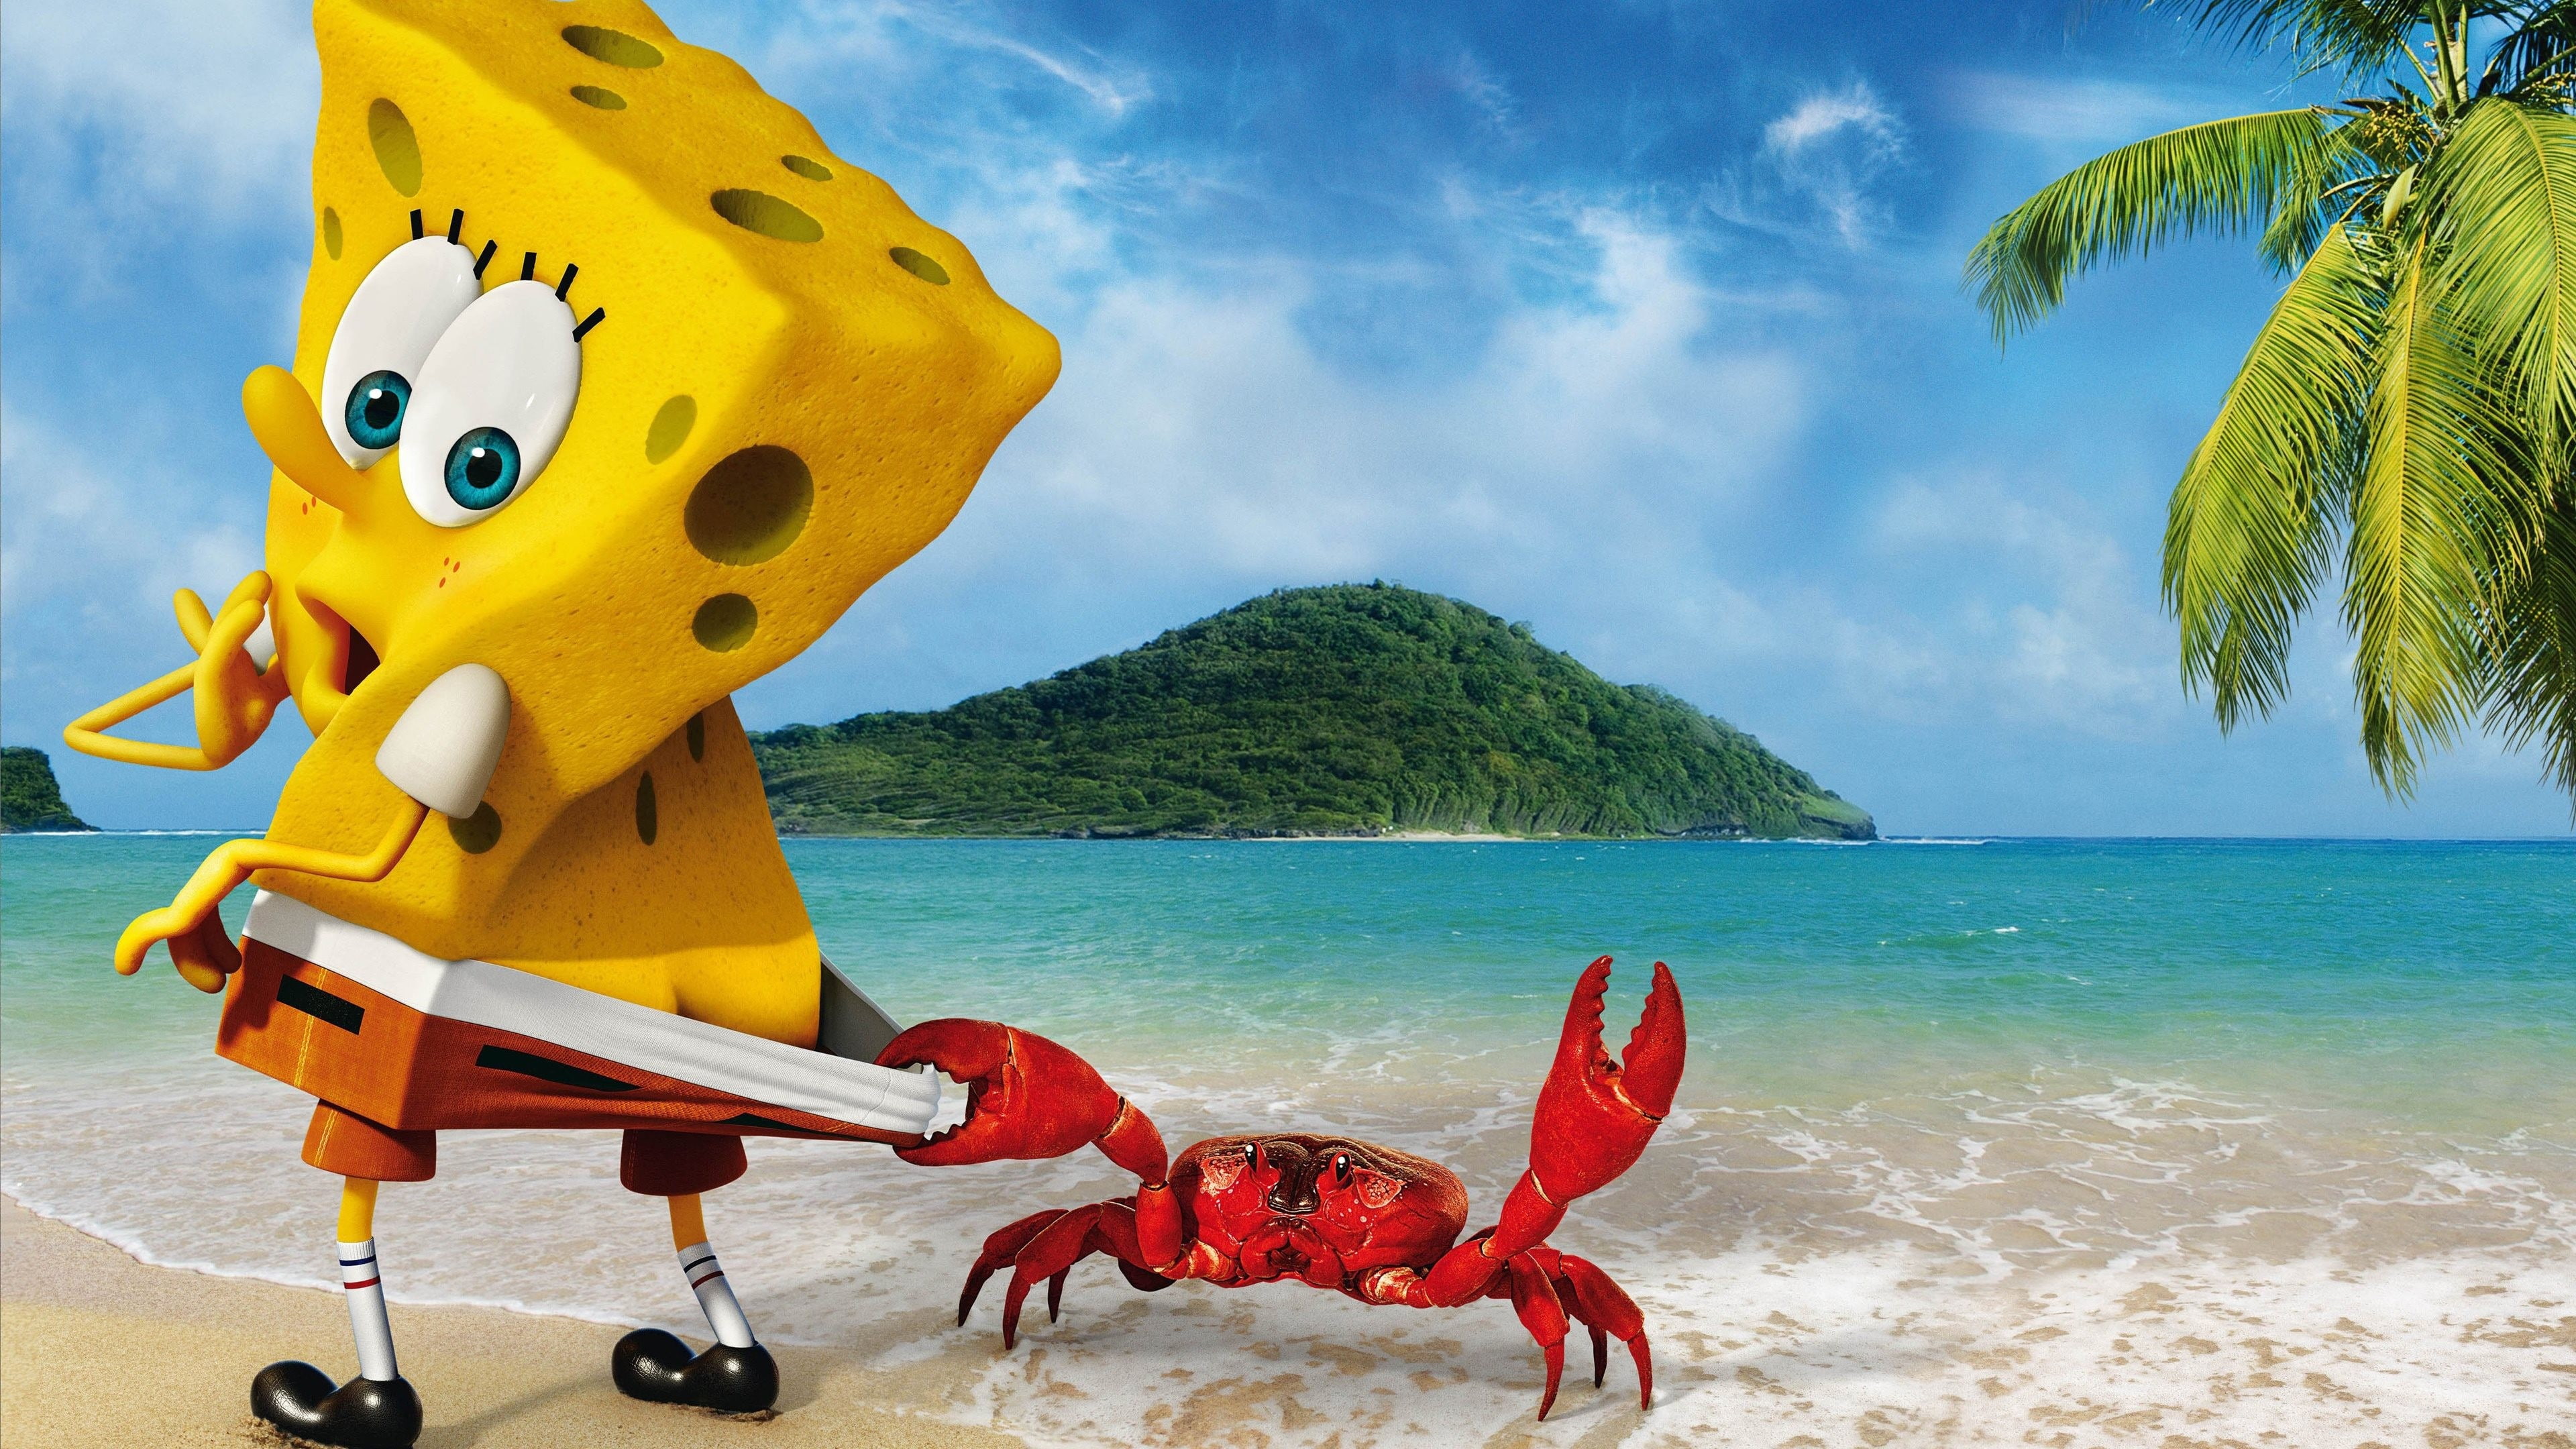 Spongebob Squarepants and crab, The SpongeBob Movie: Sponge Out of Water